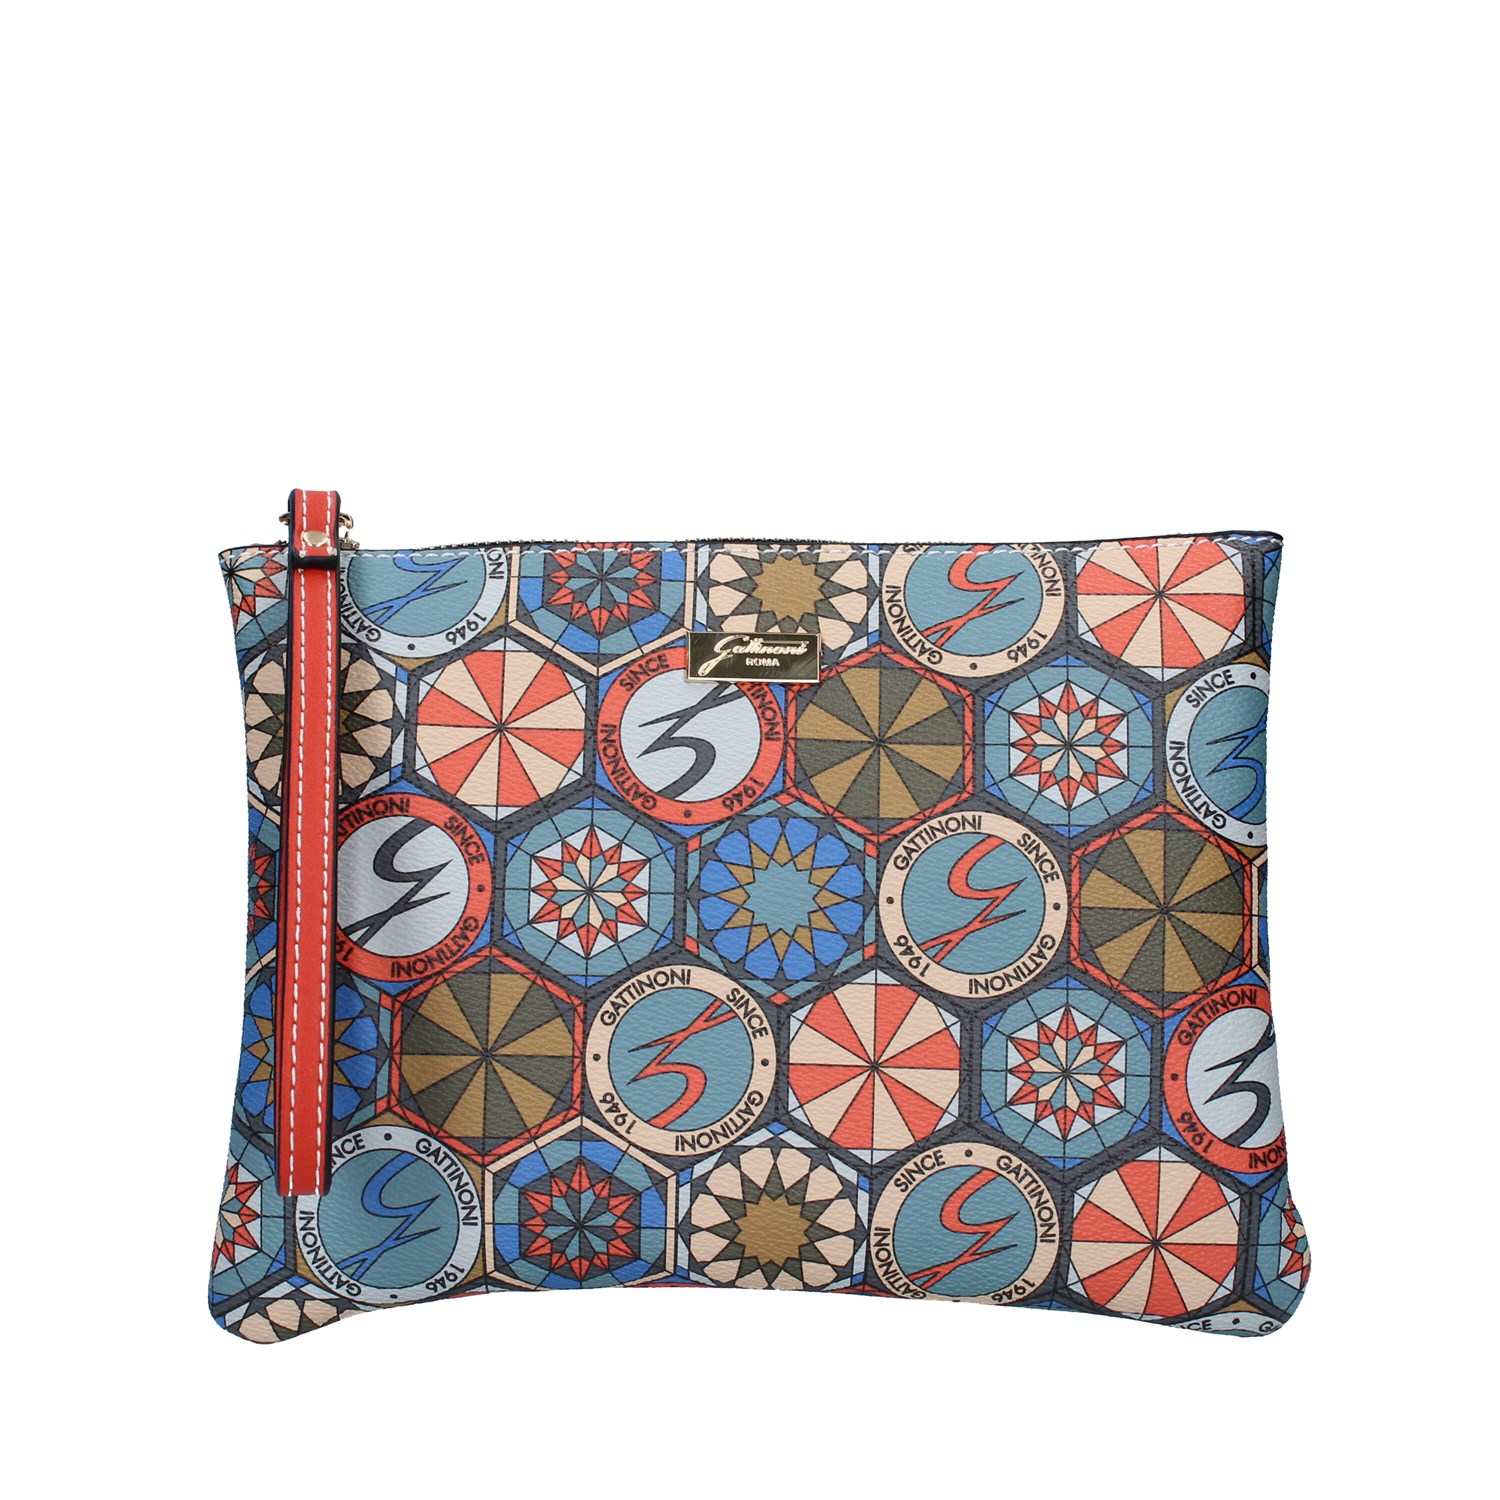 Gattinoni Roma Bags Accessories Beauty BLUE BINTD7553WP